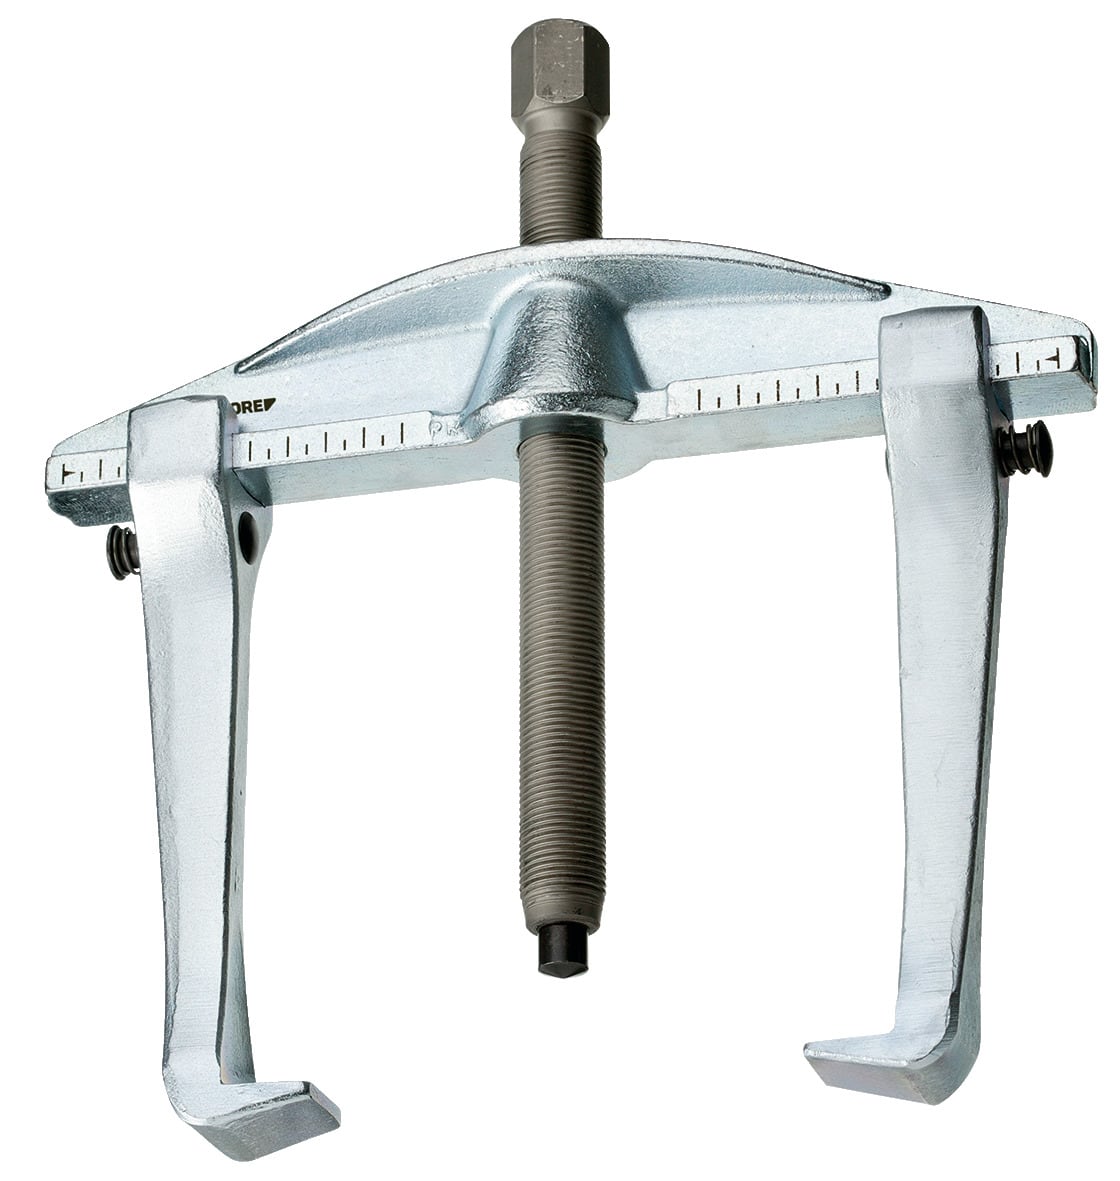 1.04/B Universal puller 2-arm pattern, rigid legs with leg brake